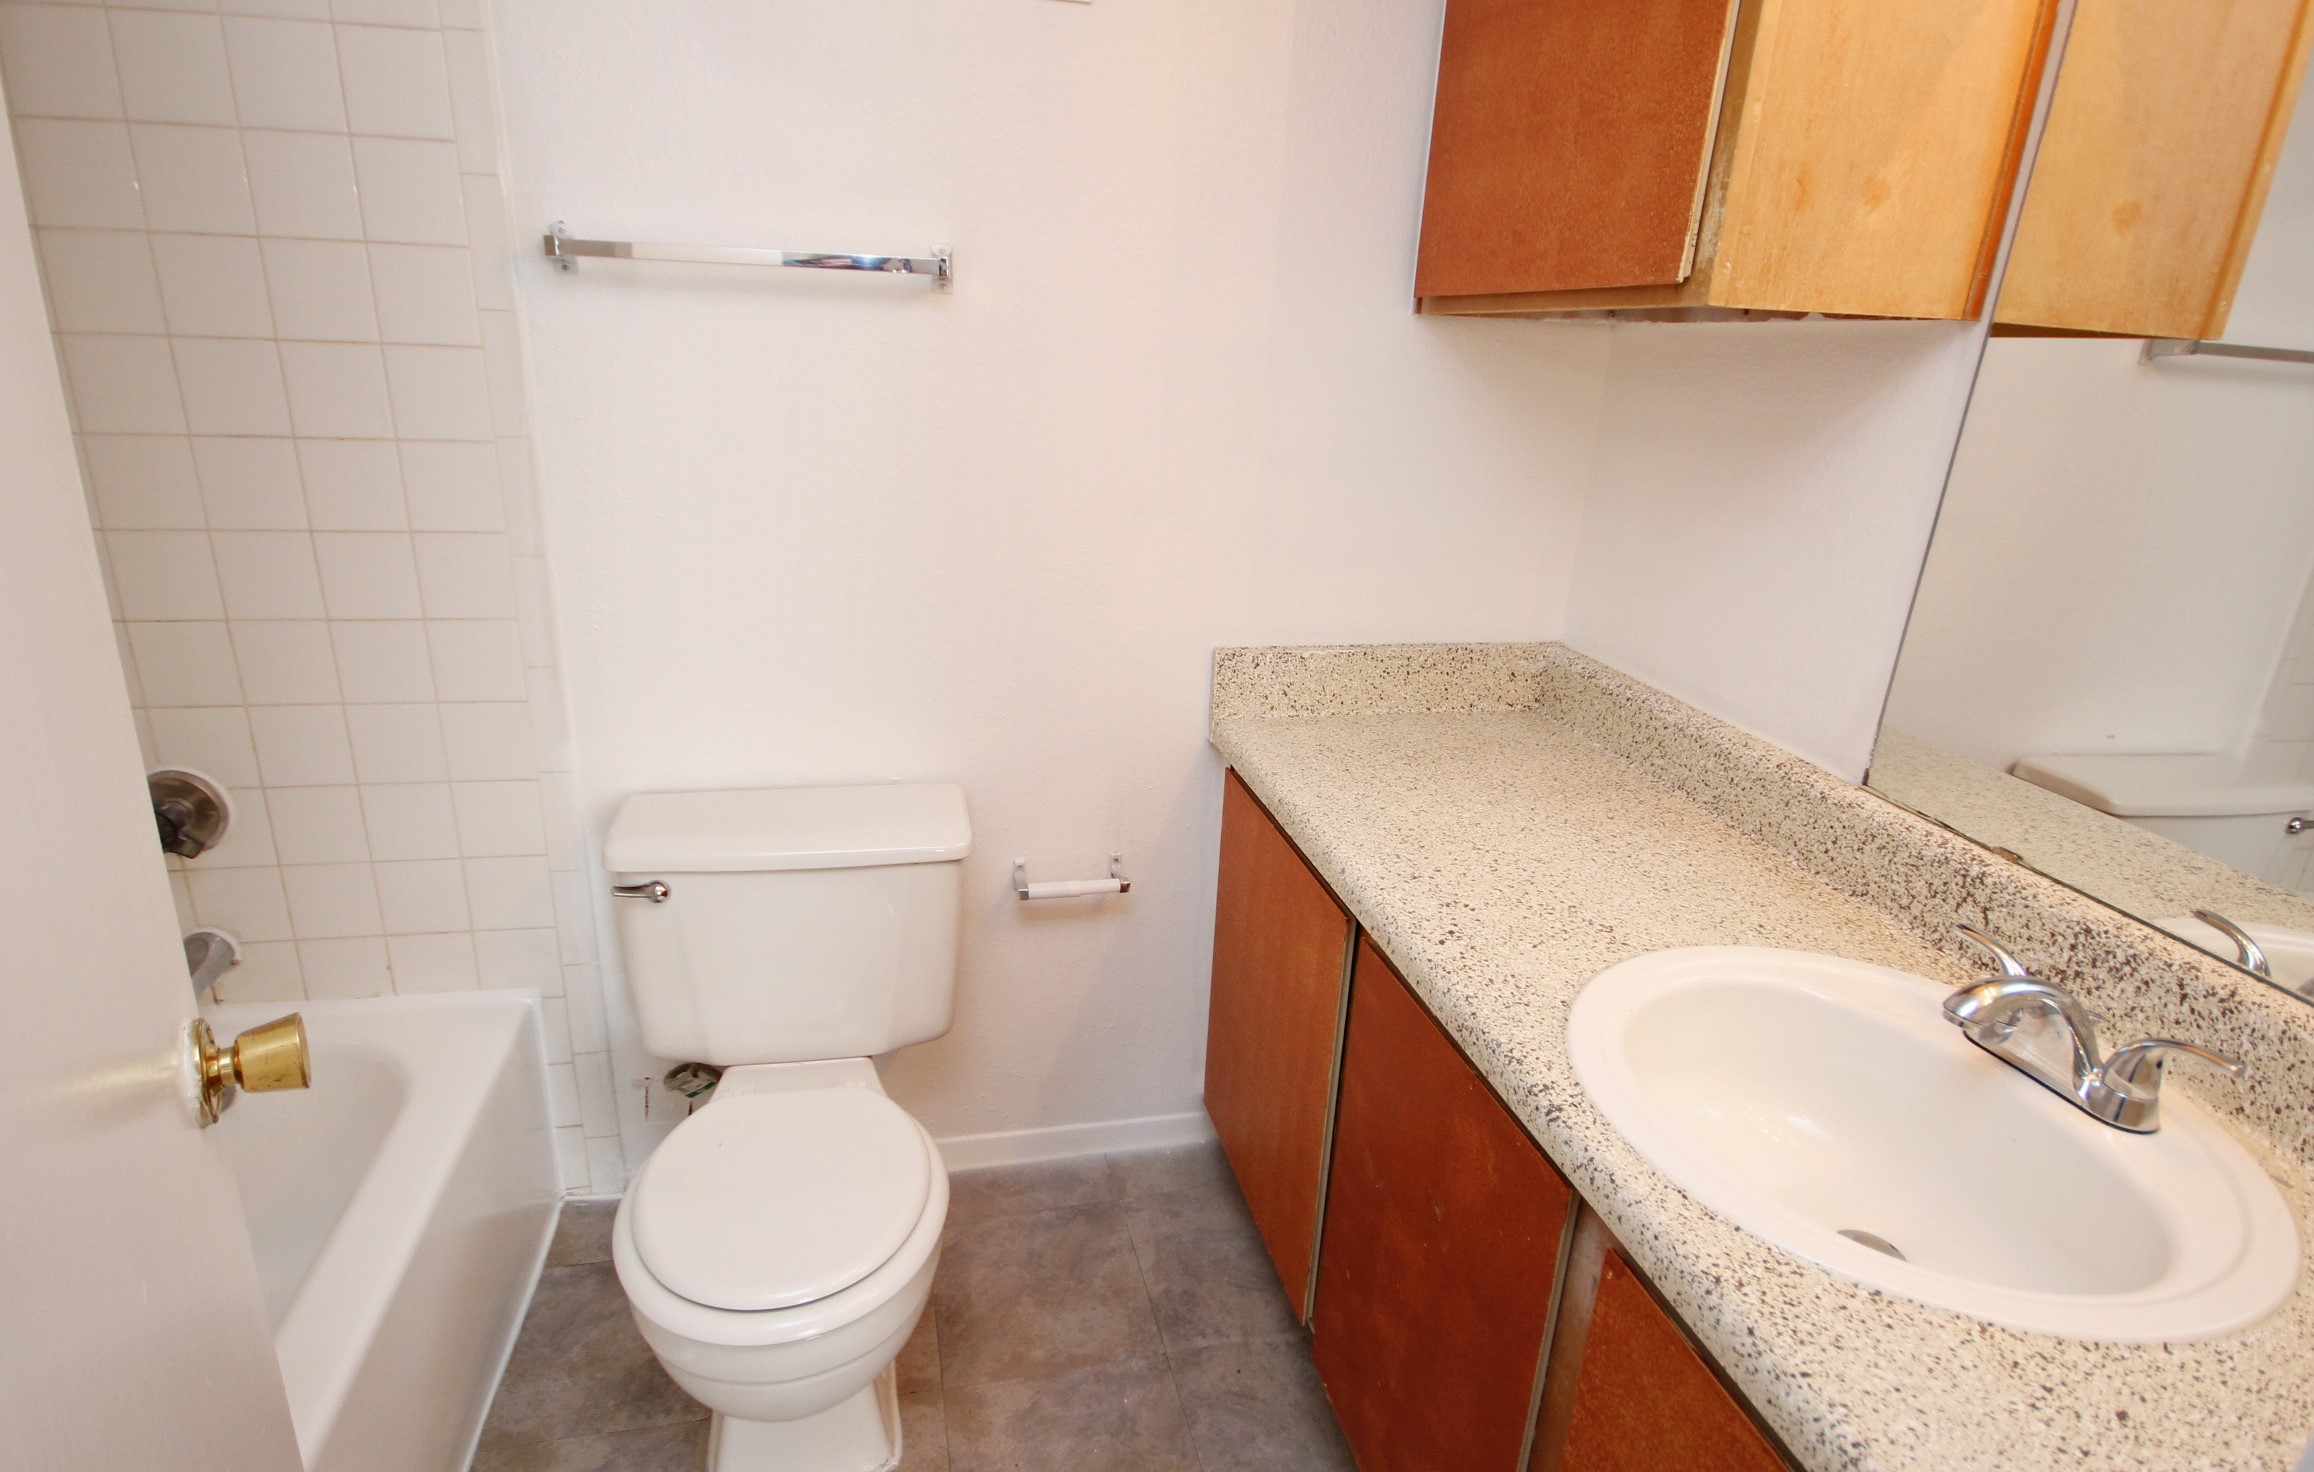 Bathroom at Marine Creek Apartments in Fort Worth, Texas